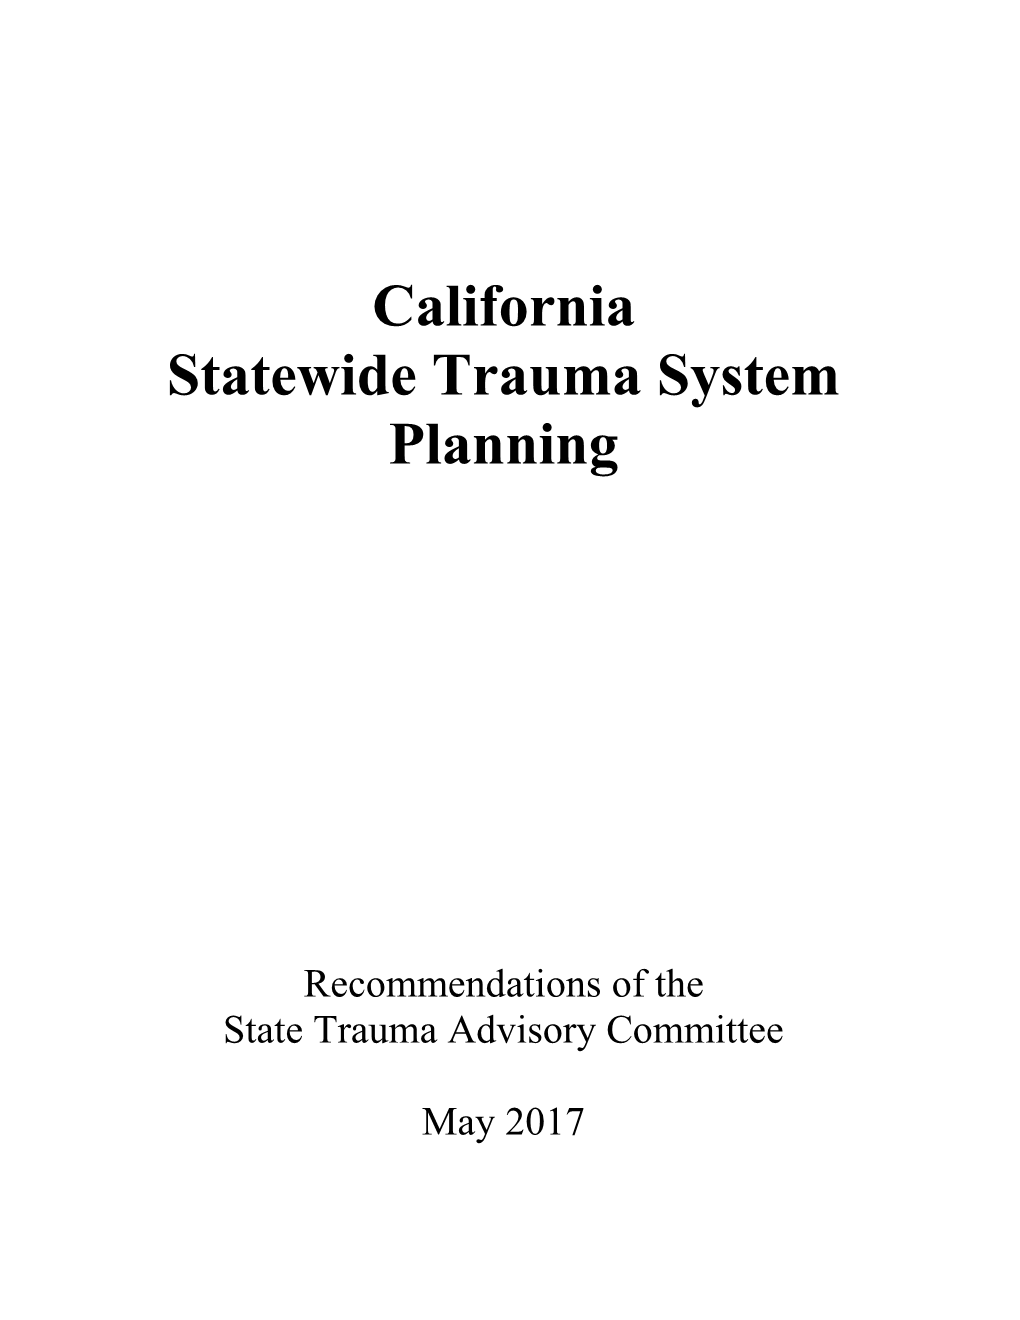 California Statewide Trauma System Planning